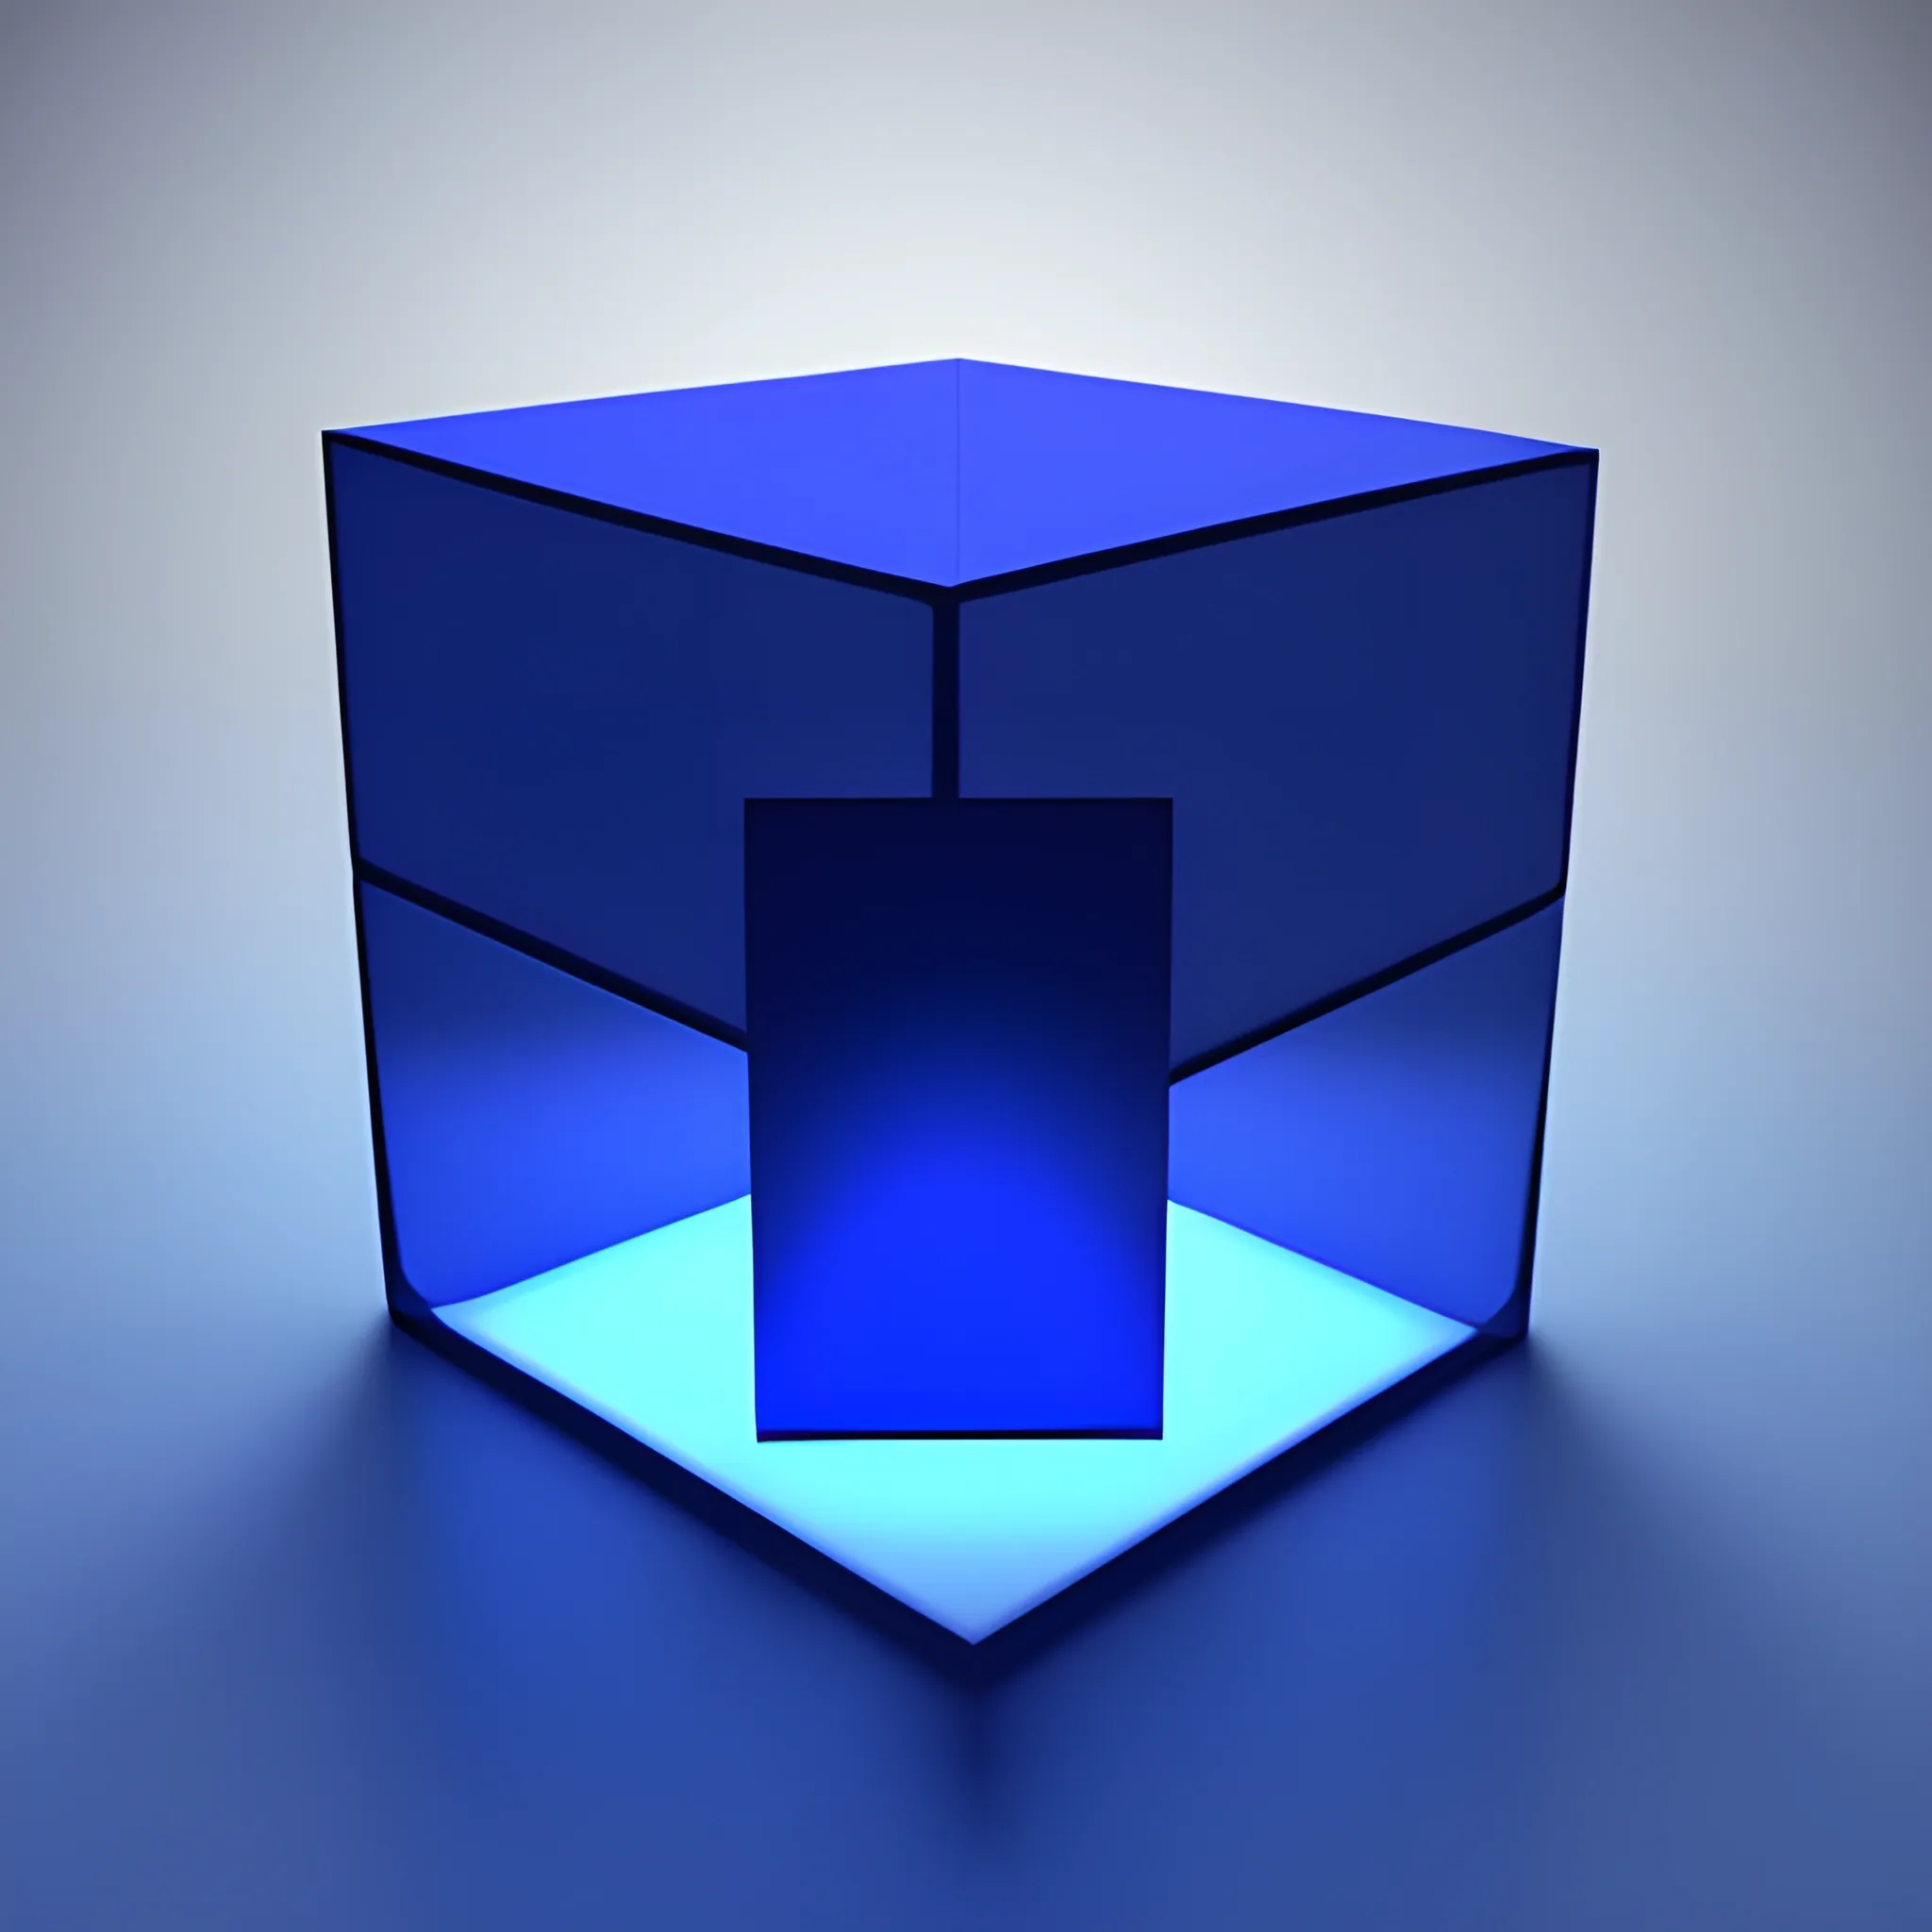 Blue cube, dark cube, 3D shadow inside